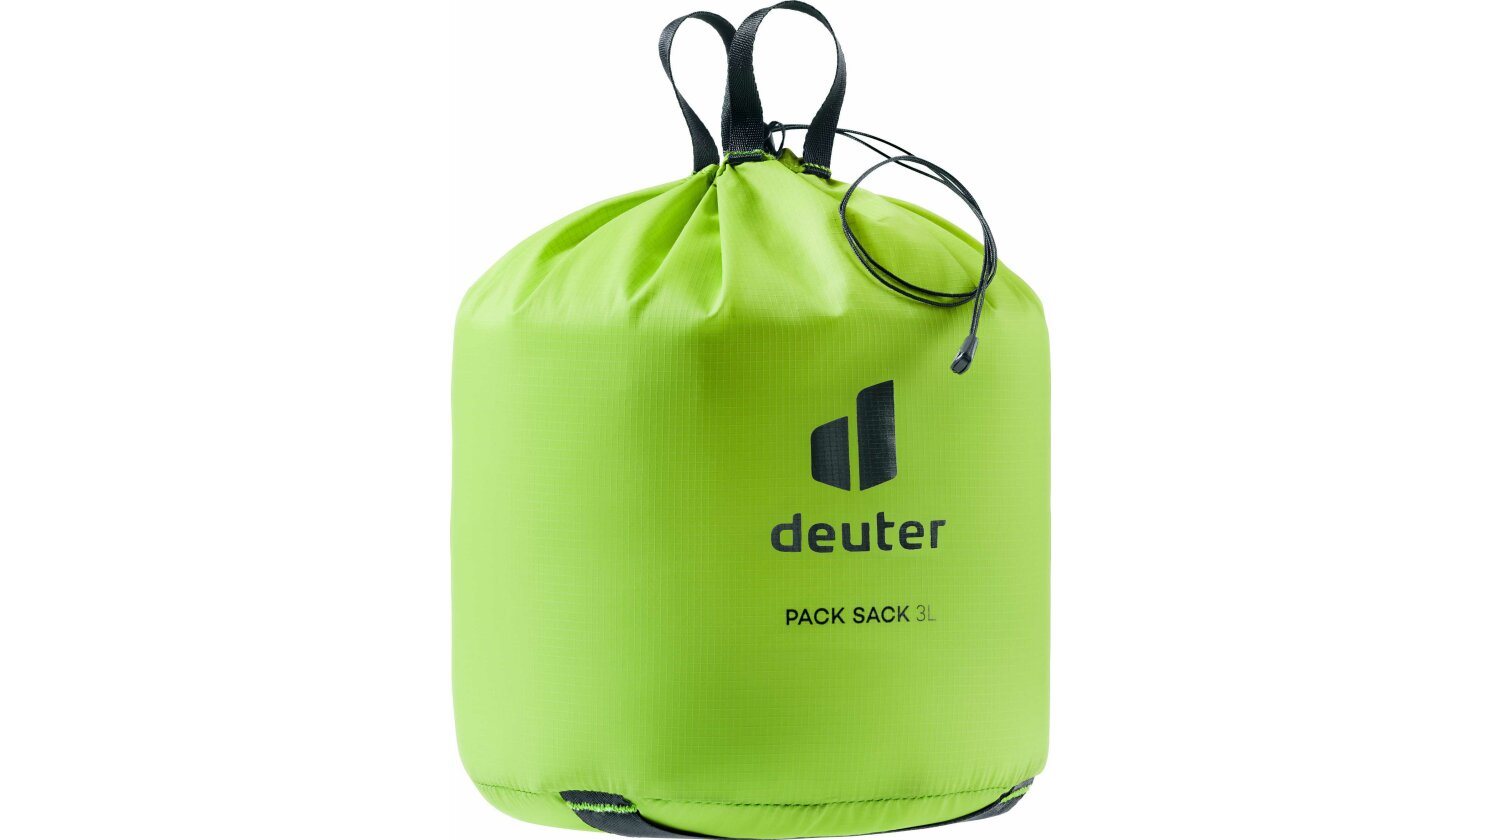 Deuter Pack Sack Packtasche citrus 3 L